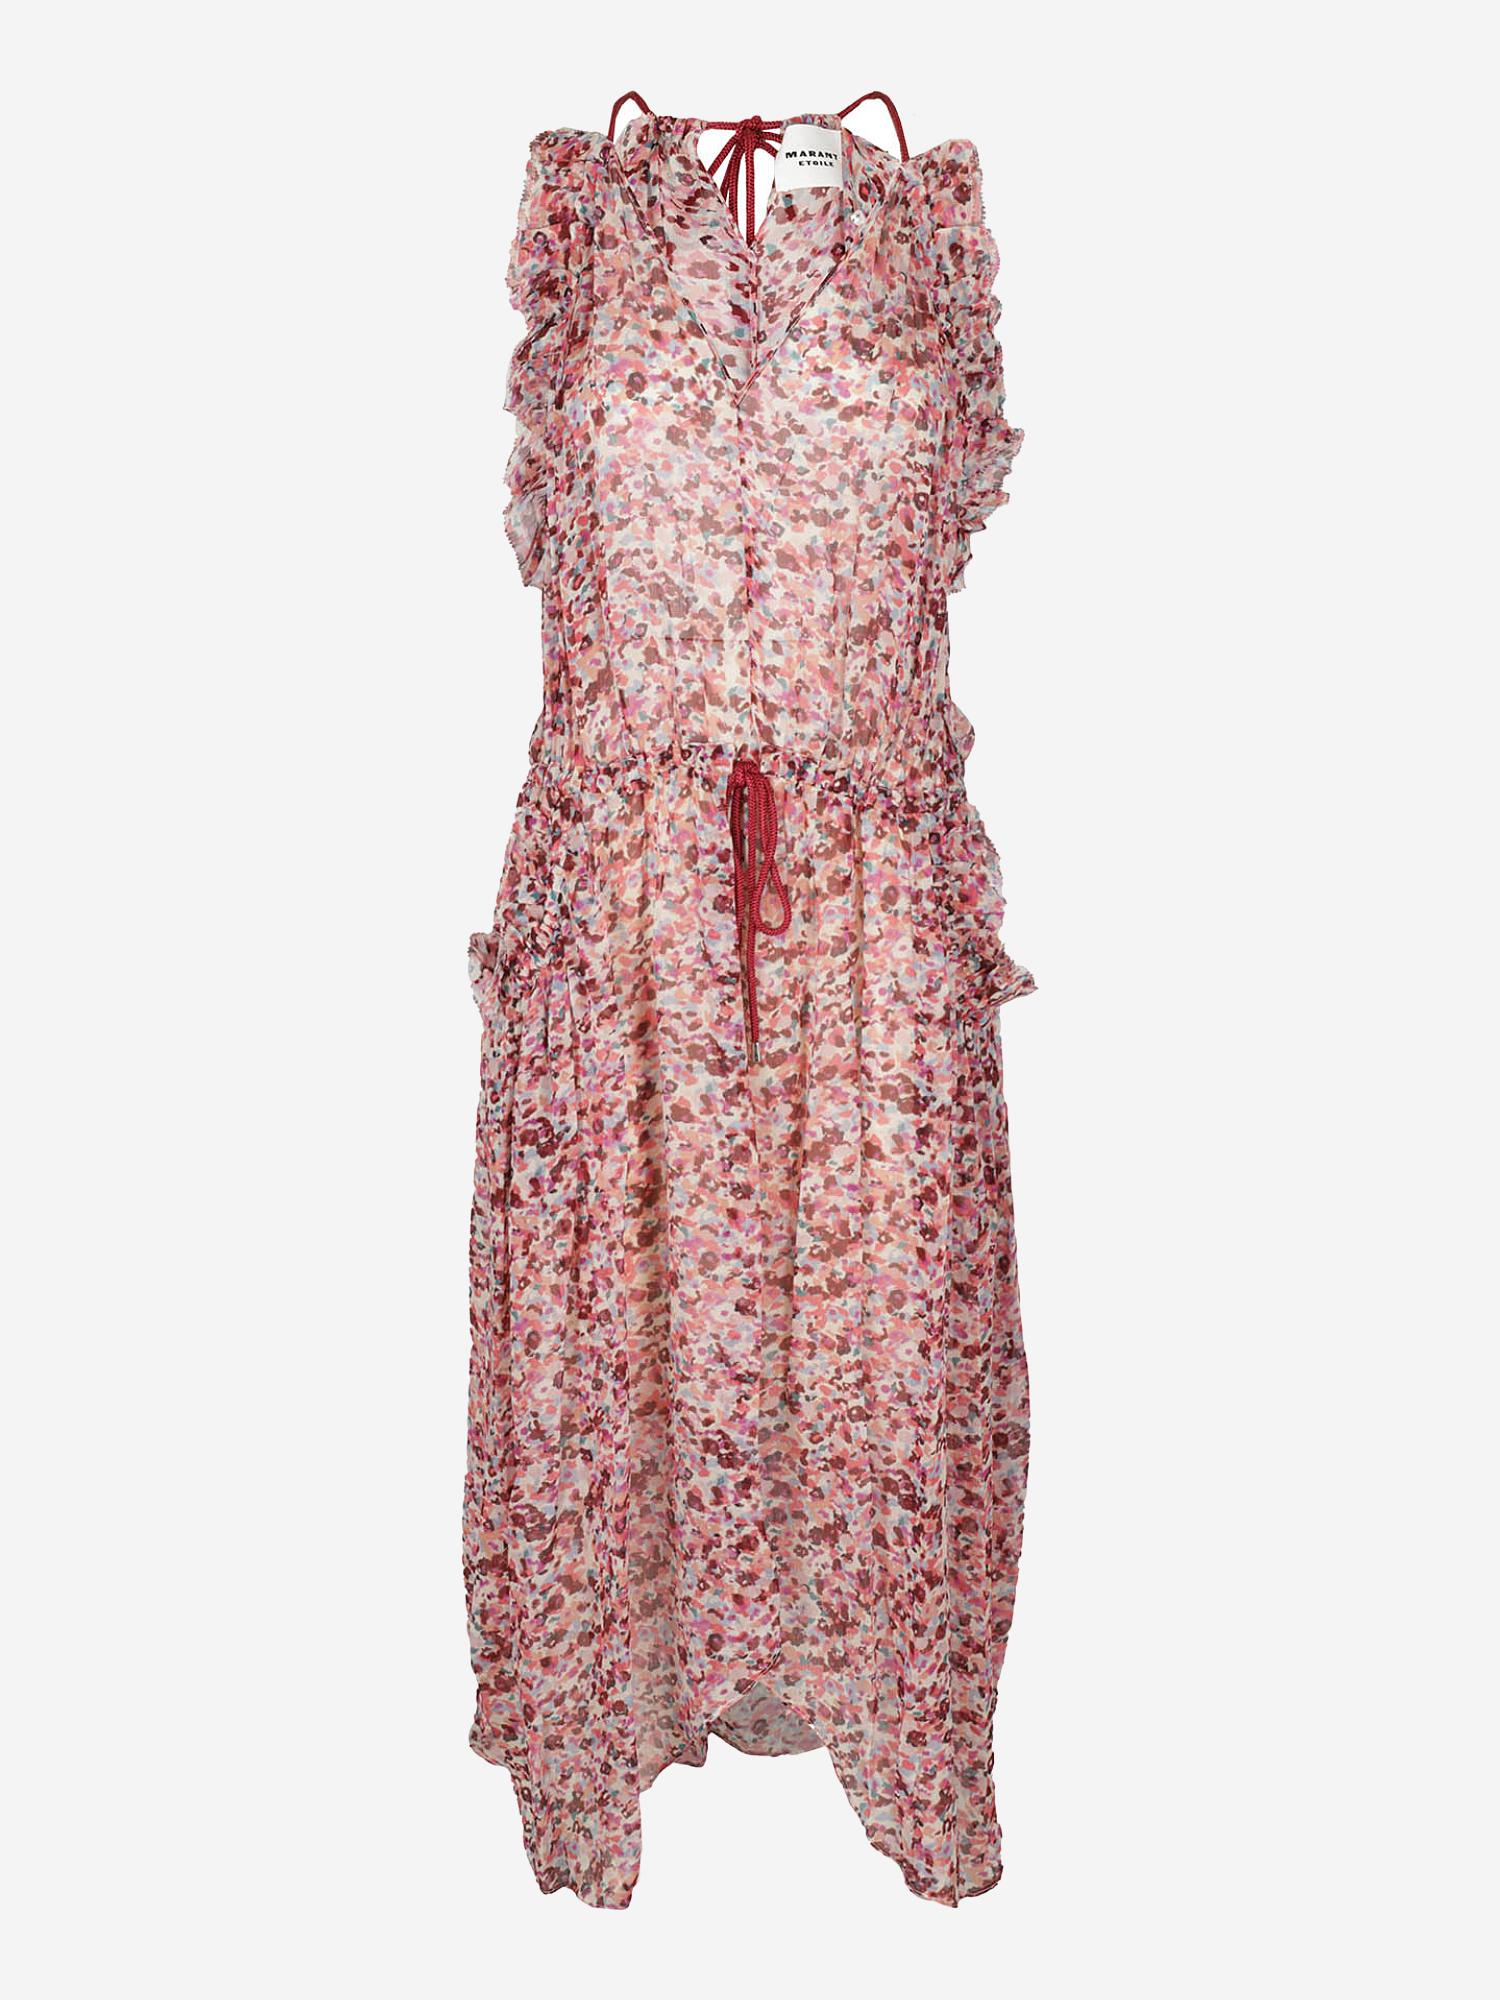 Isabel Marant Dress Pink | Lyst